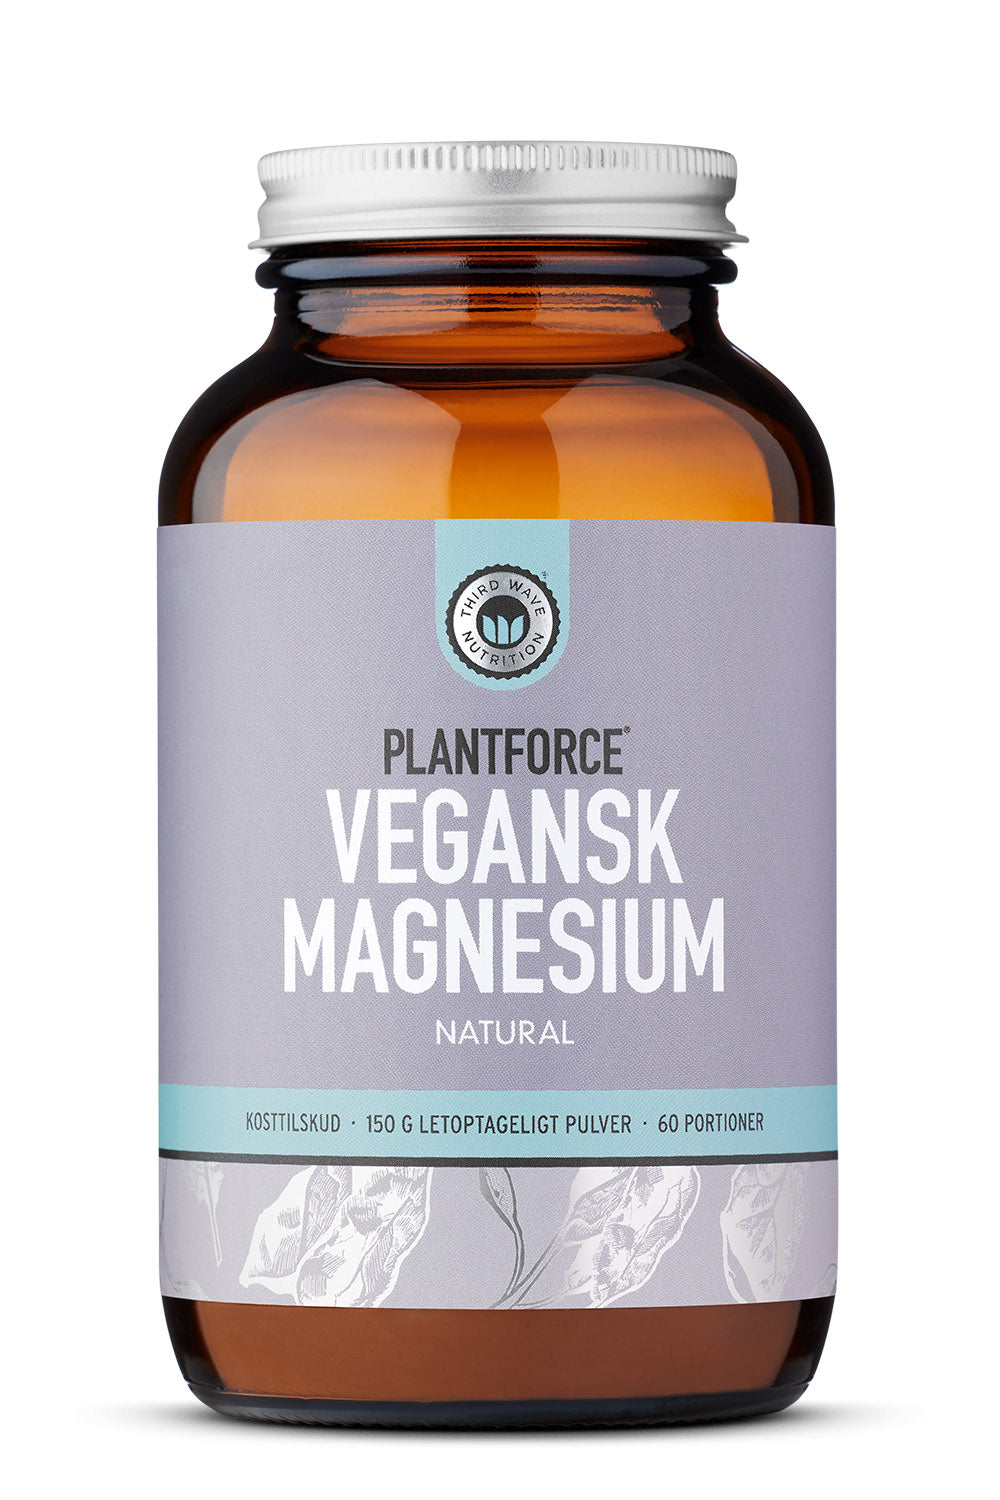 Planteforce - Magnesium natural - 150g